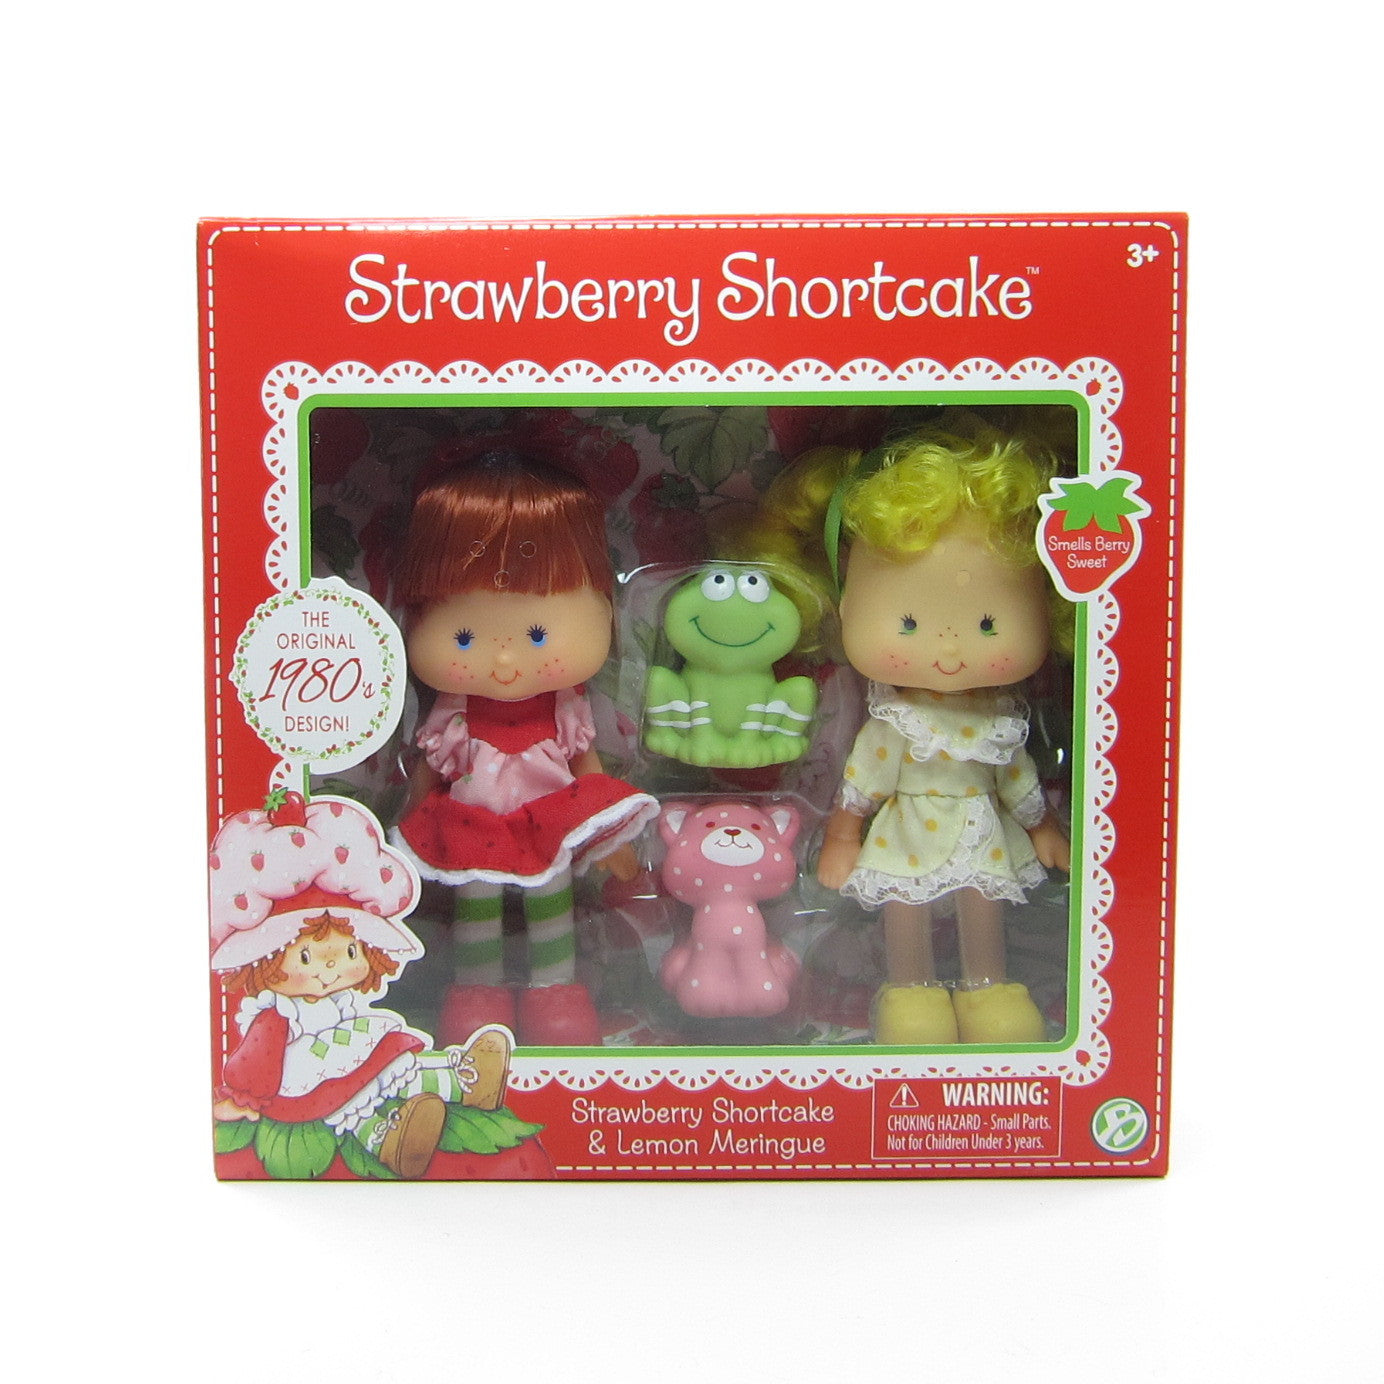 Strawberry Shortcake and Lemon Meringue classic reissued boxed doll set